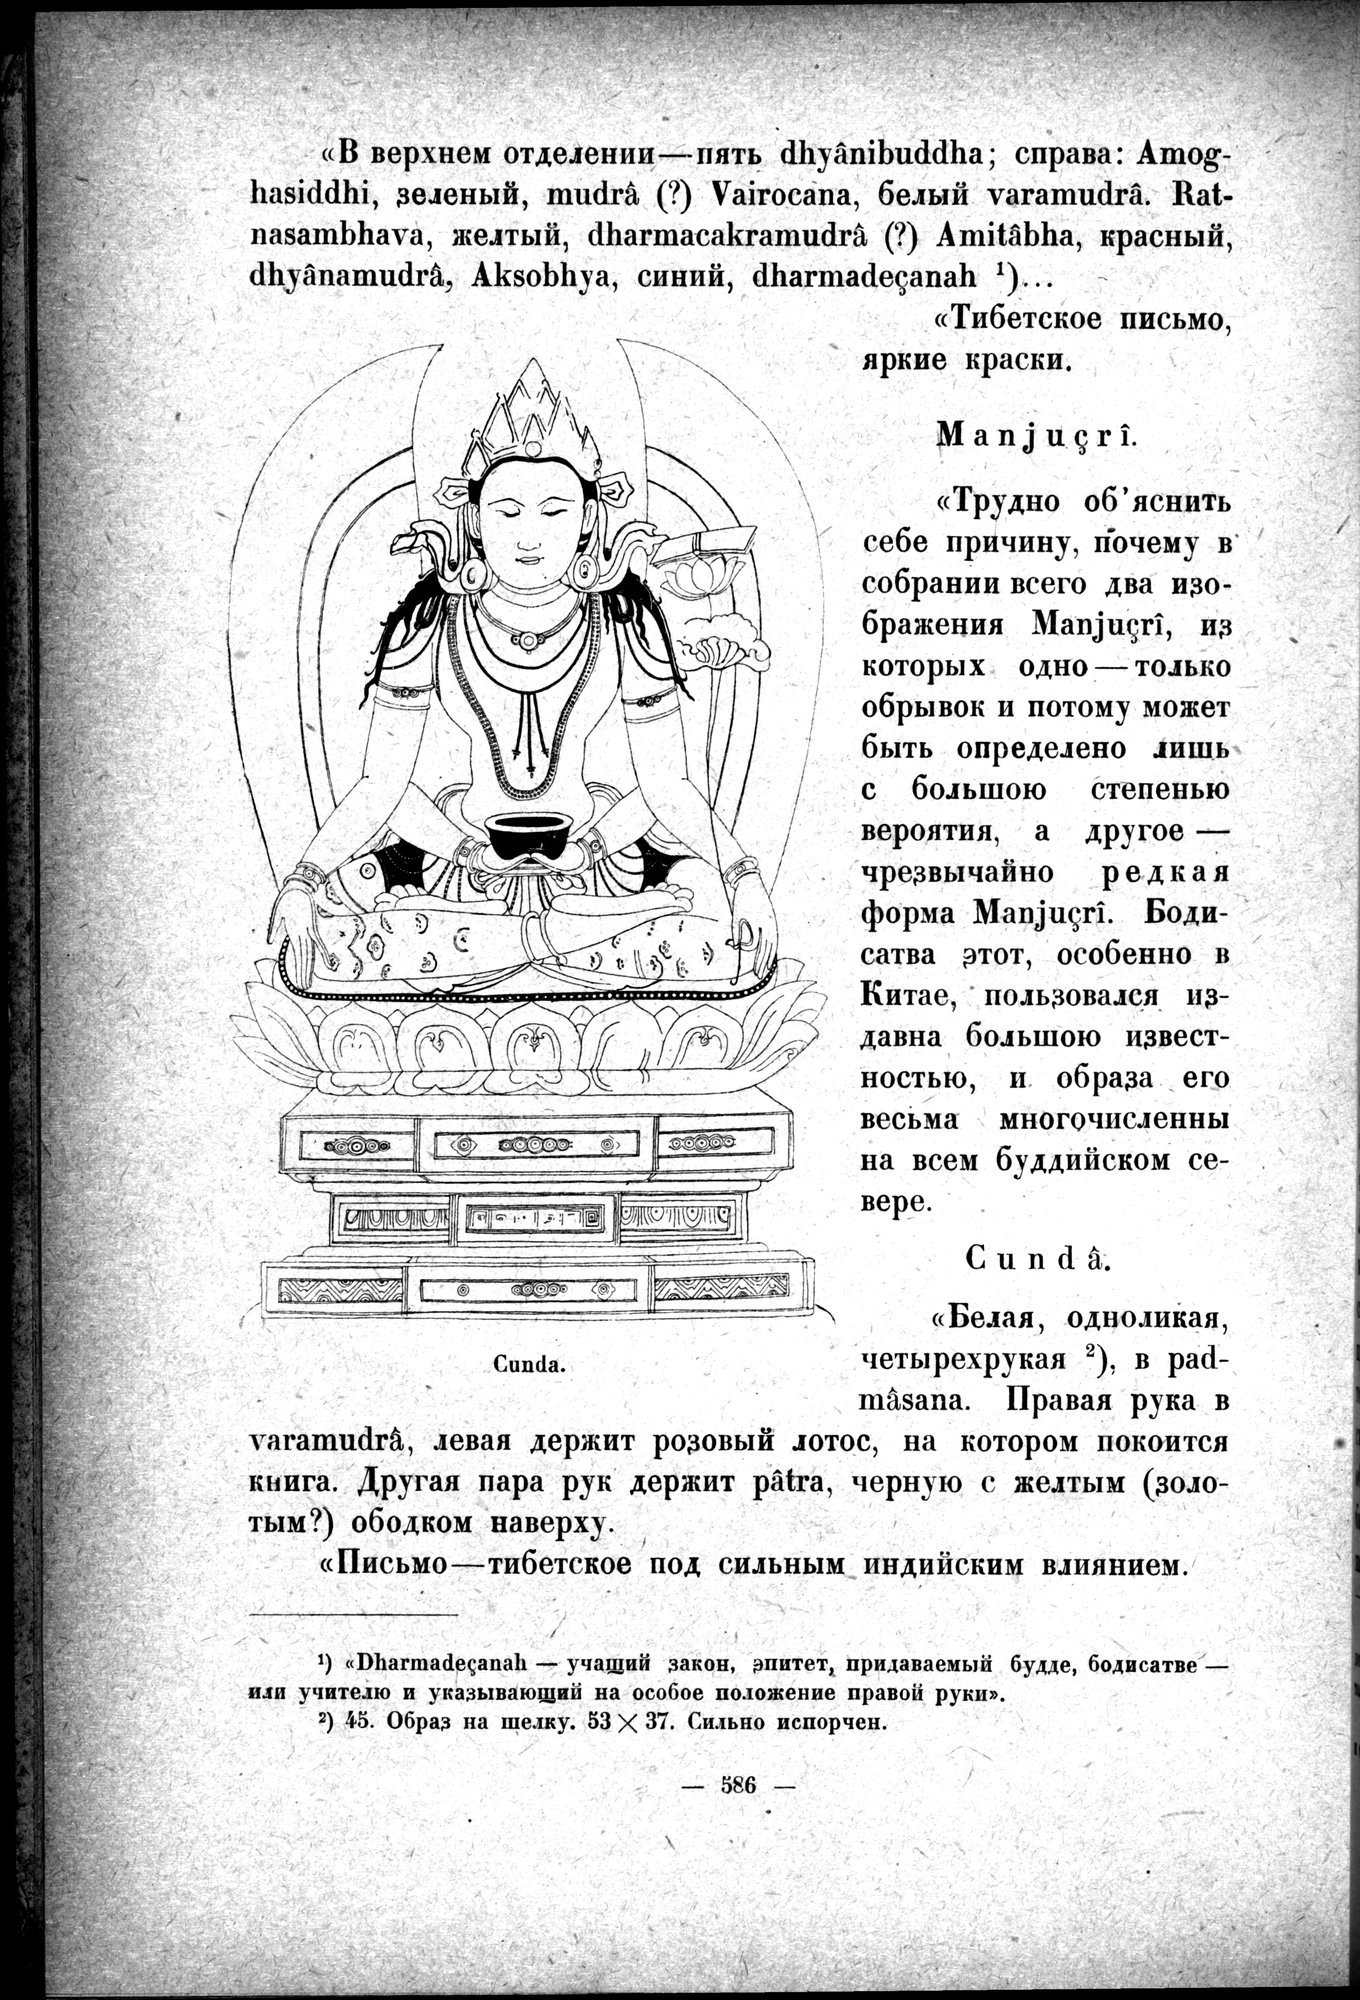 Mongoliya i Amdo i mertby gorod Khara-Khoto : vol.1 / Page 672 (Grayscale High Resolution Image)